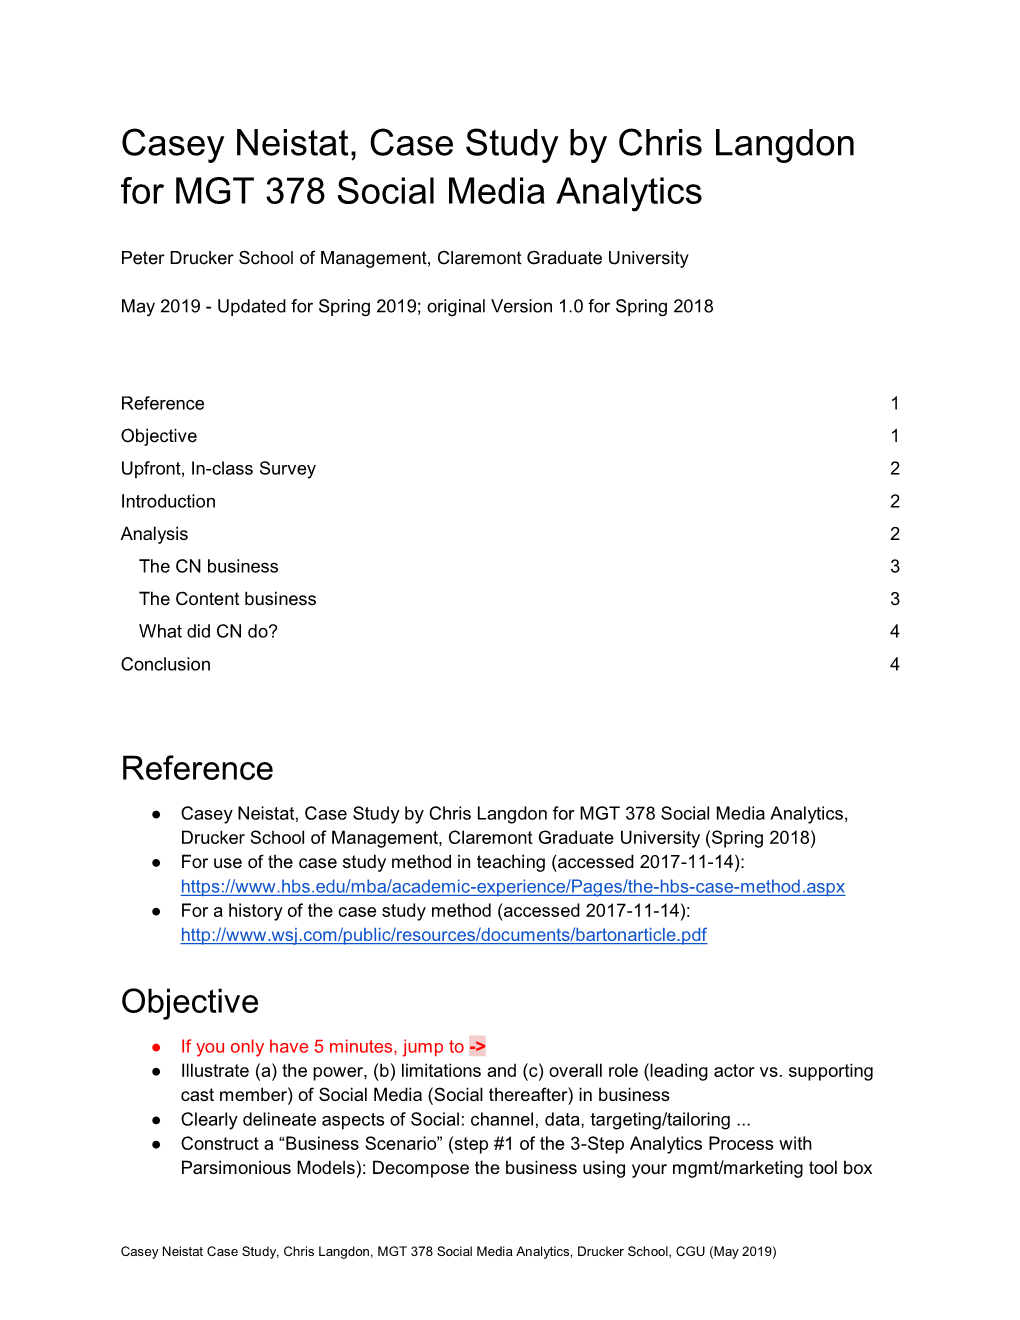 Casey Neistat Case Study, Chris Langdon, MGT 378 Social Media Analytics, Drucker School, CGU (May 2019) ○ Schlueter Langdon, C